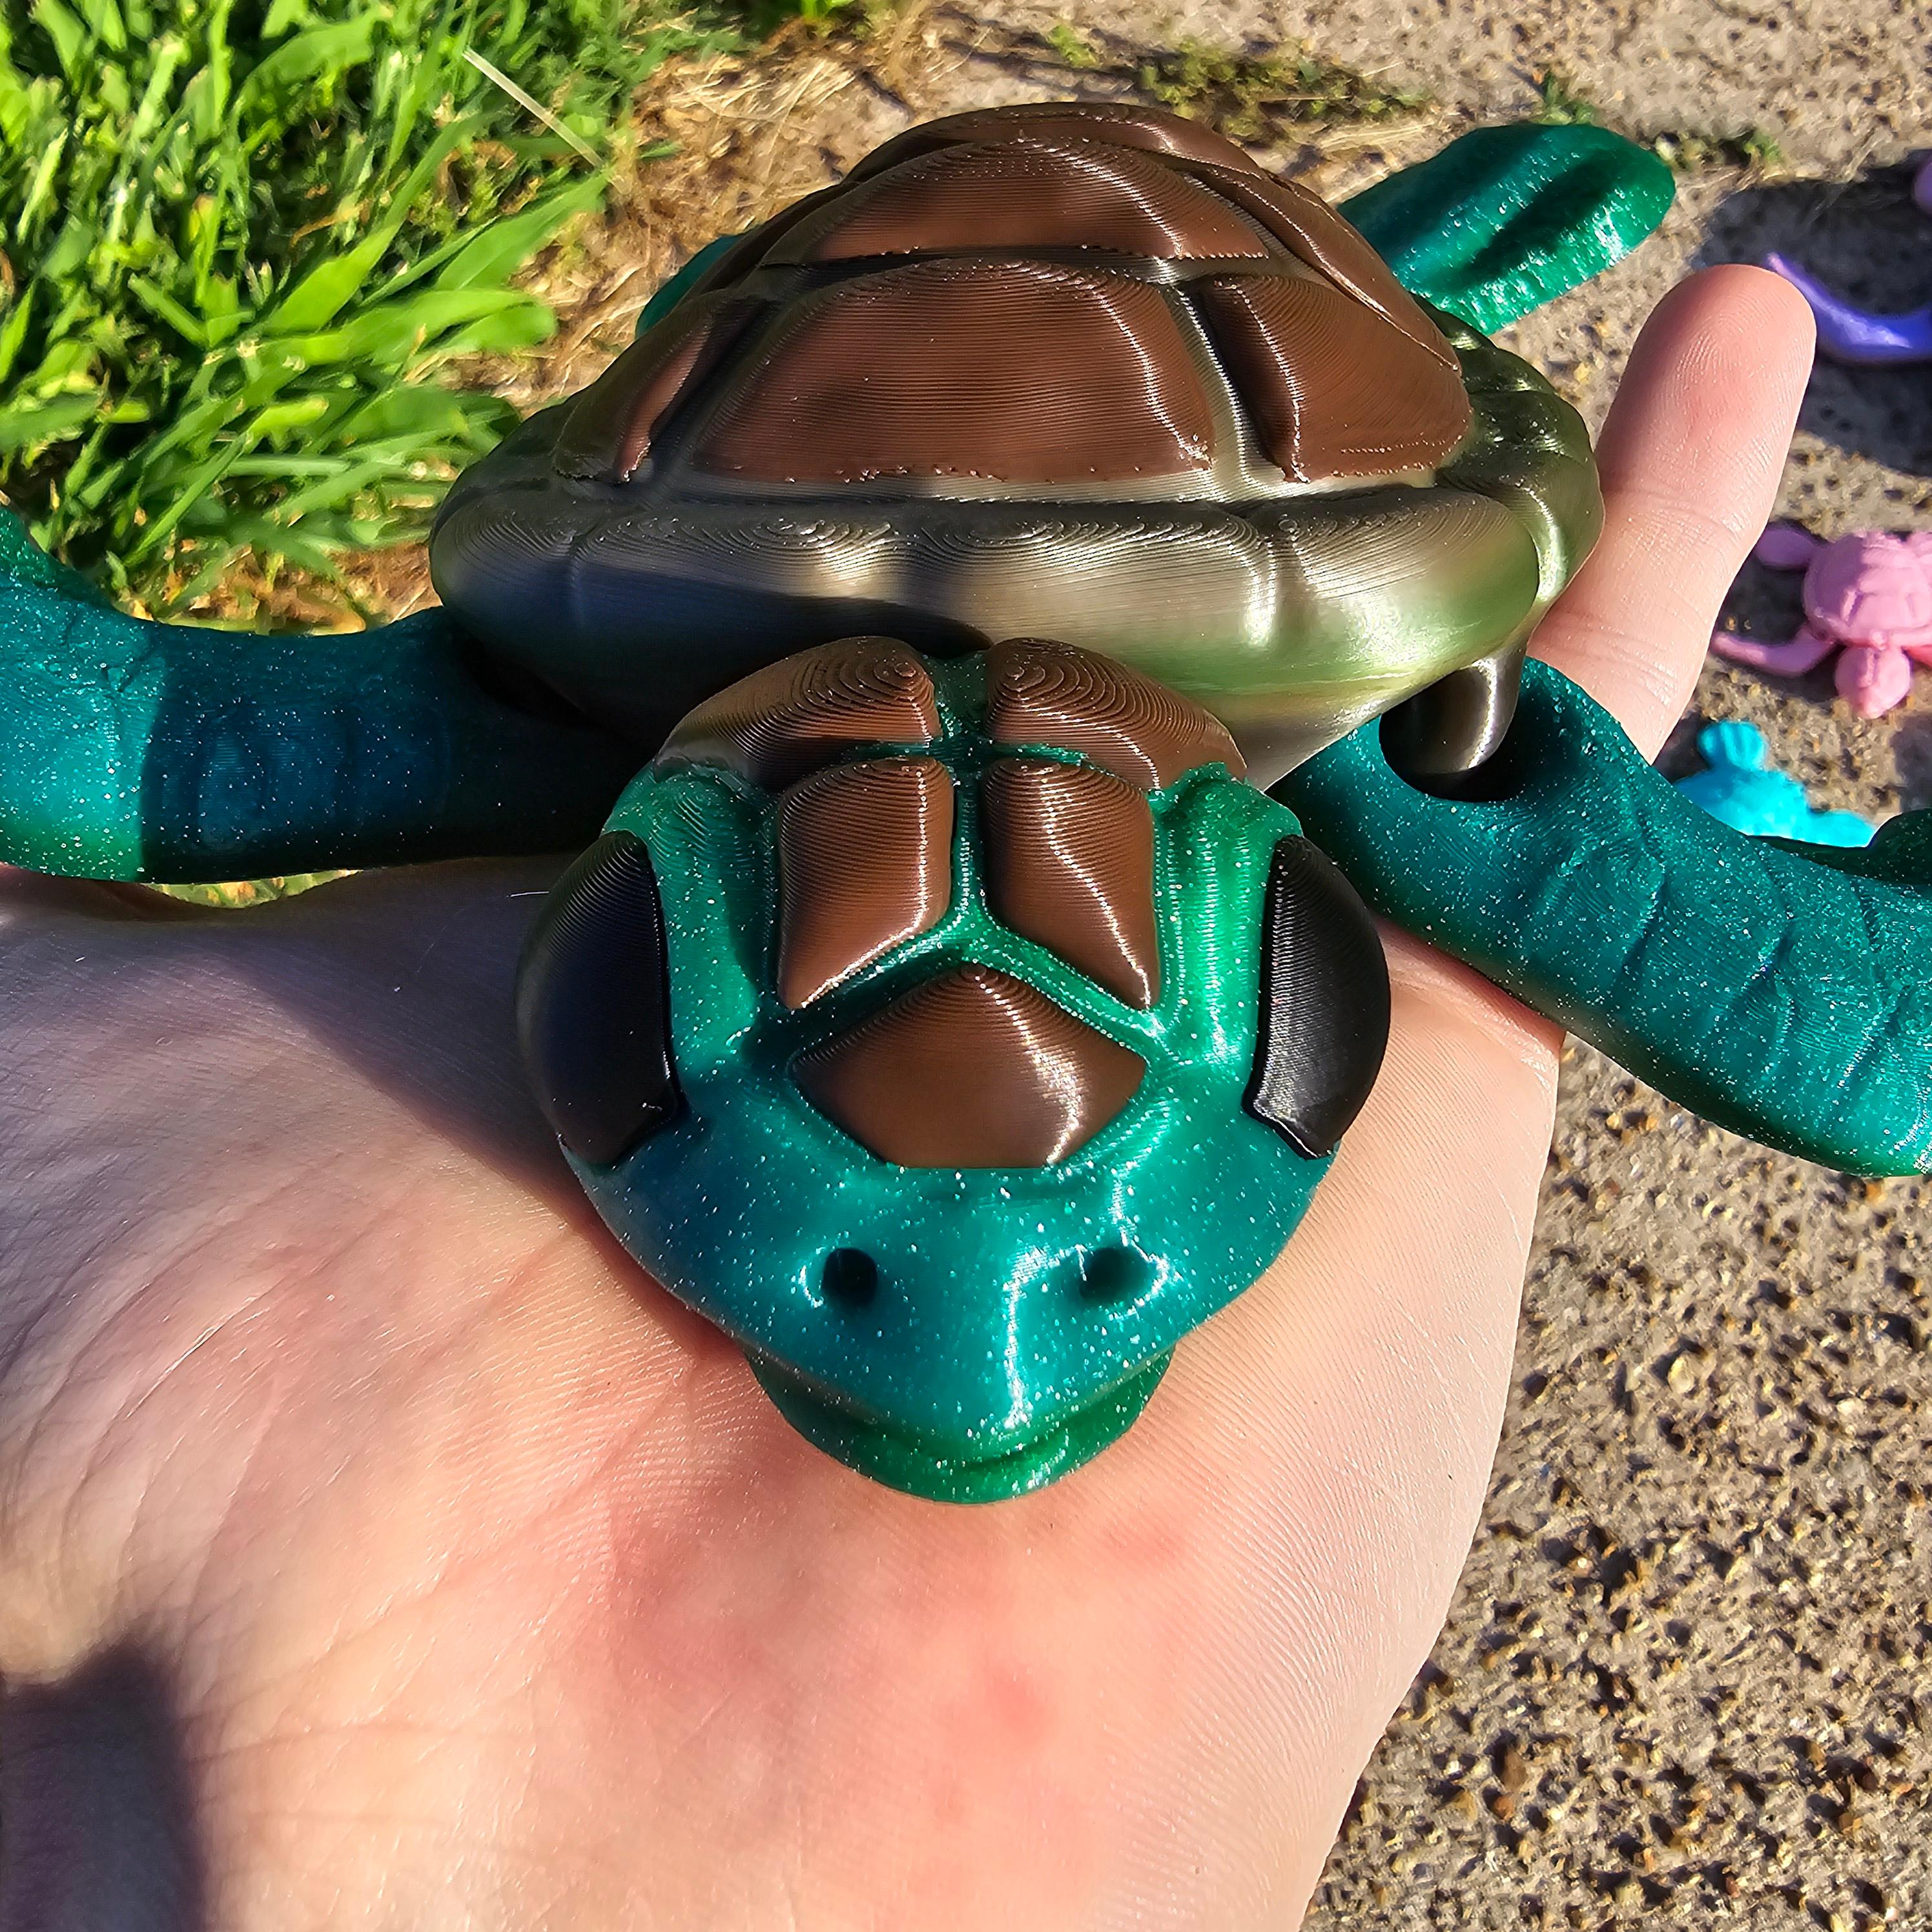 This Baby Sea Turtle says "Hello"!